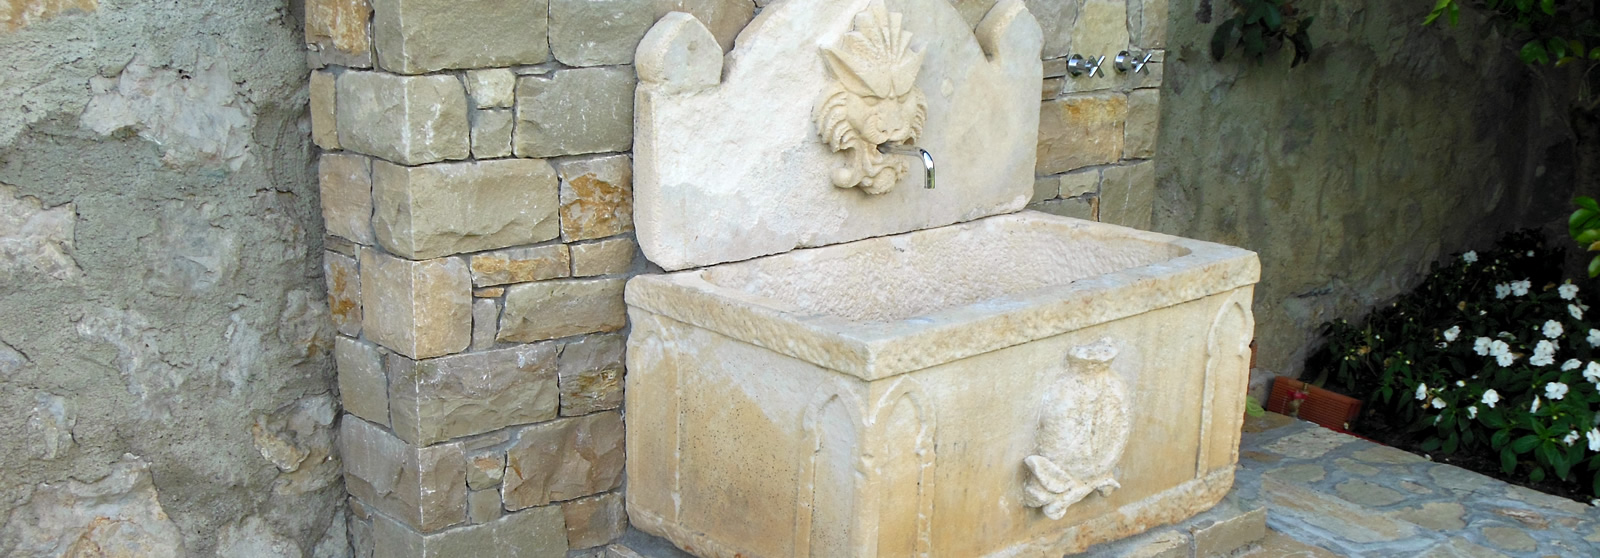 Creazione di fontane in pietra personalizzate